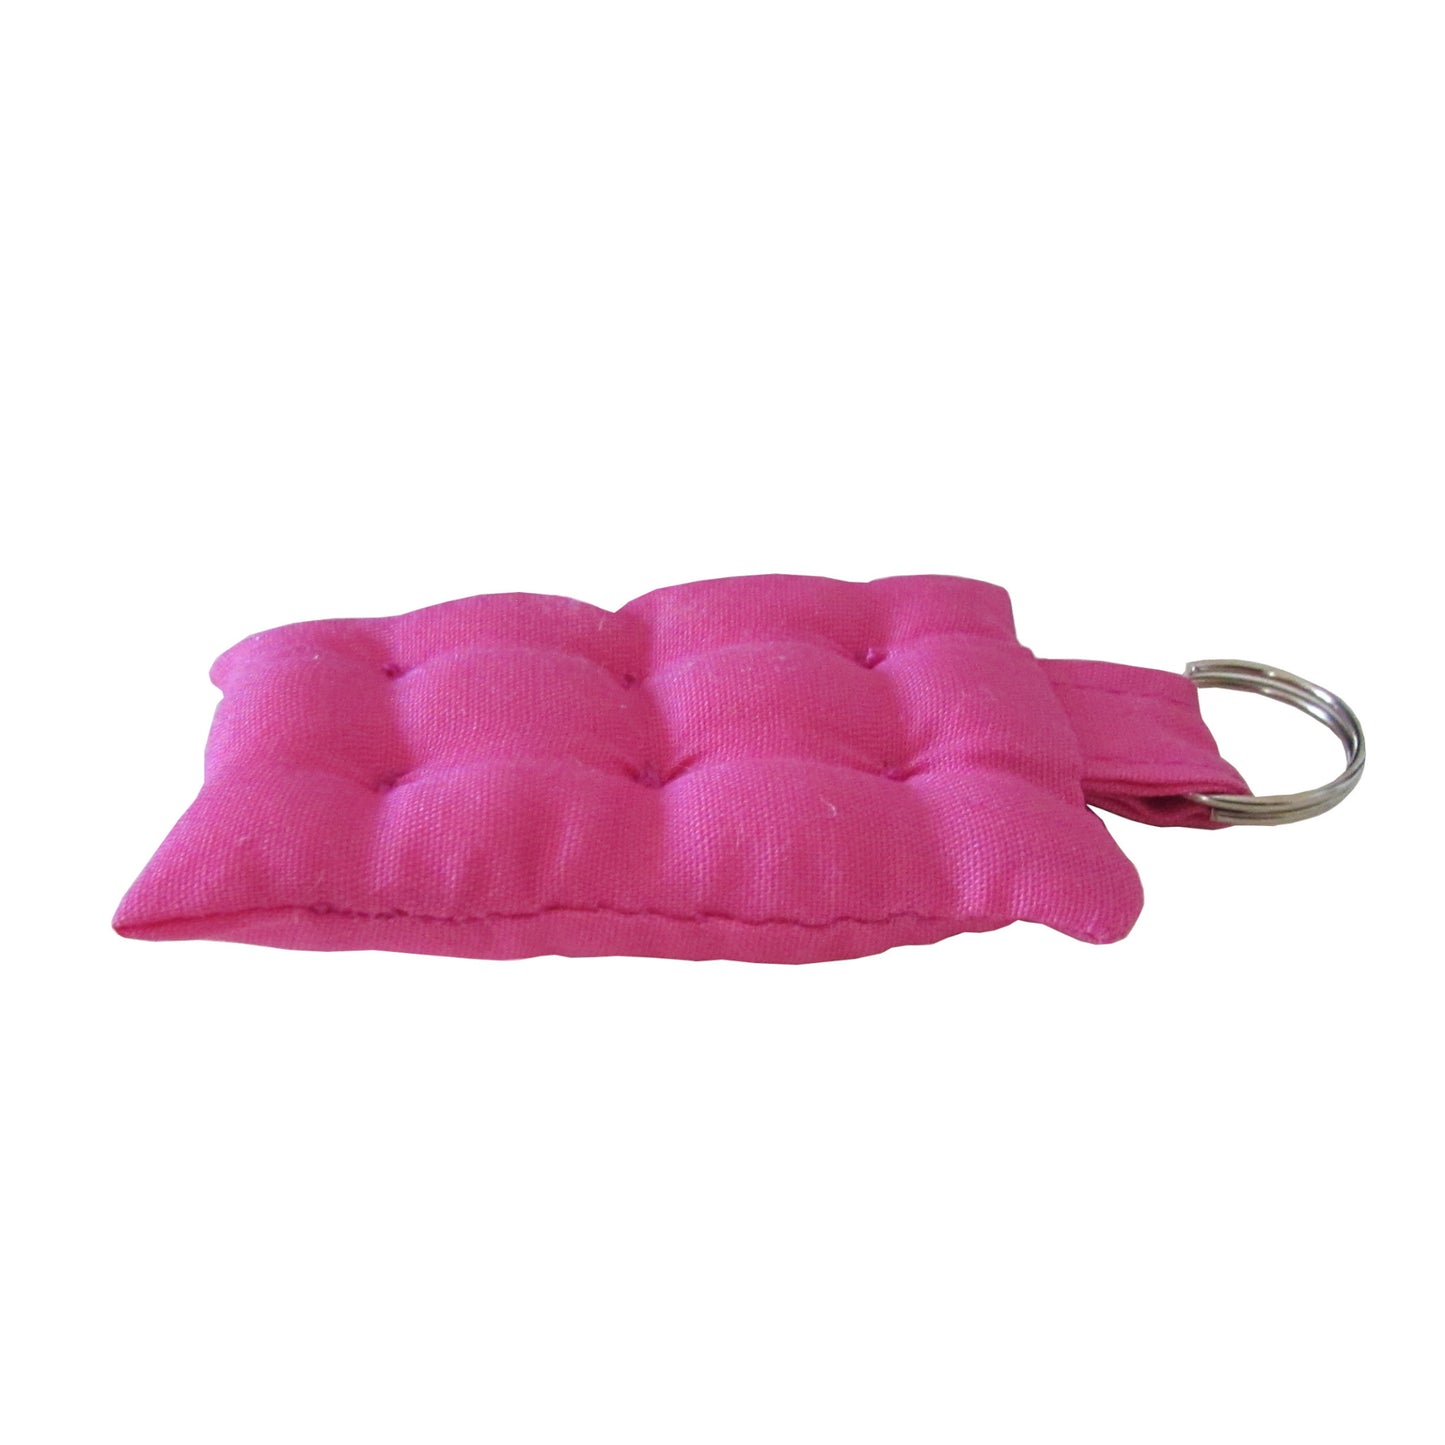 Bright Pink Mattress Key Chain Side view